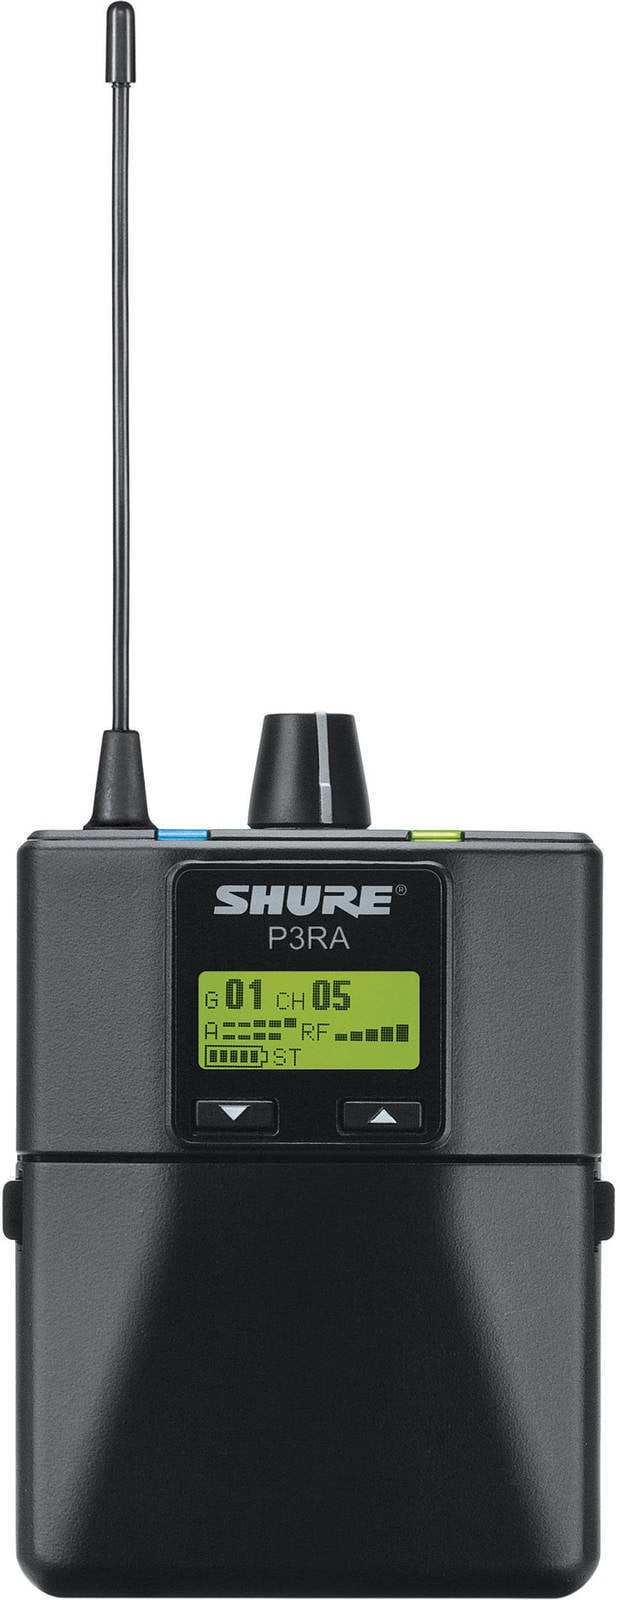 In-Ear monitorrendszer komponens Shure P3RA-H20 - PSM 300 Bodypack Receiver H20: 518–542 MHz